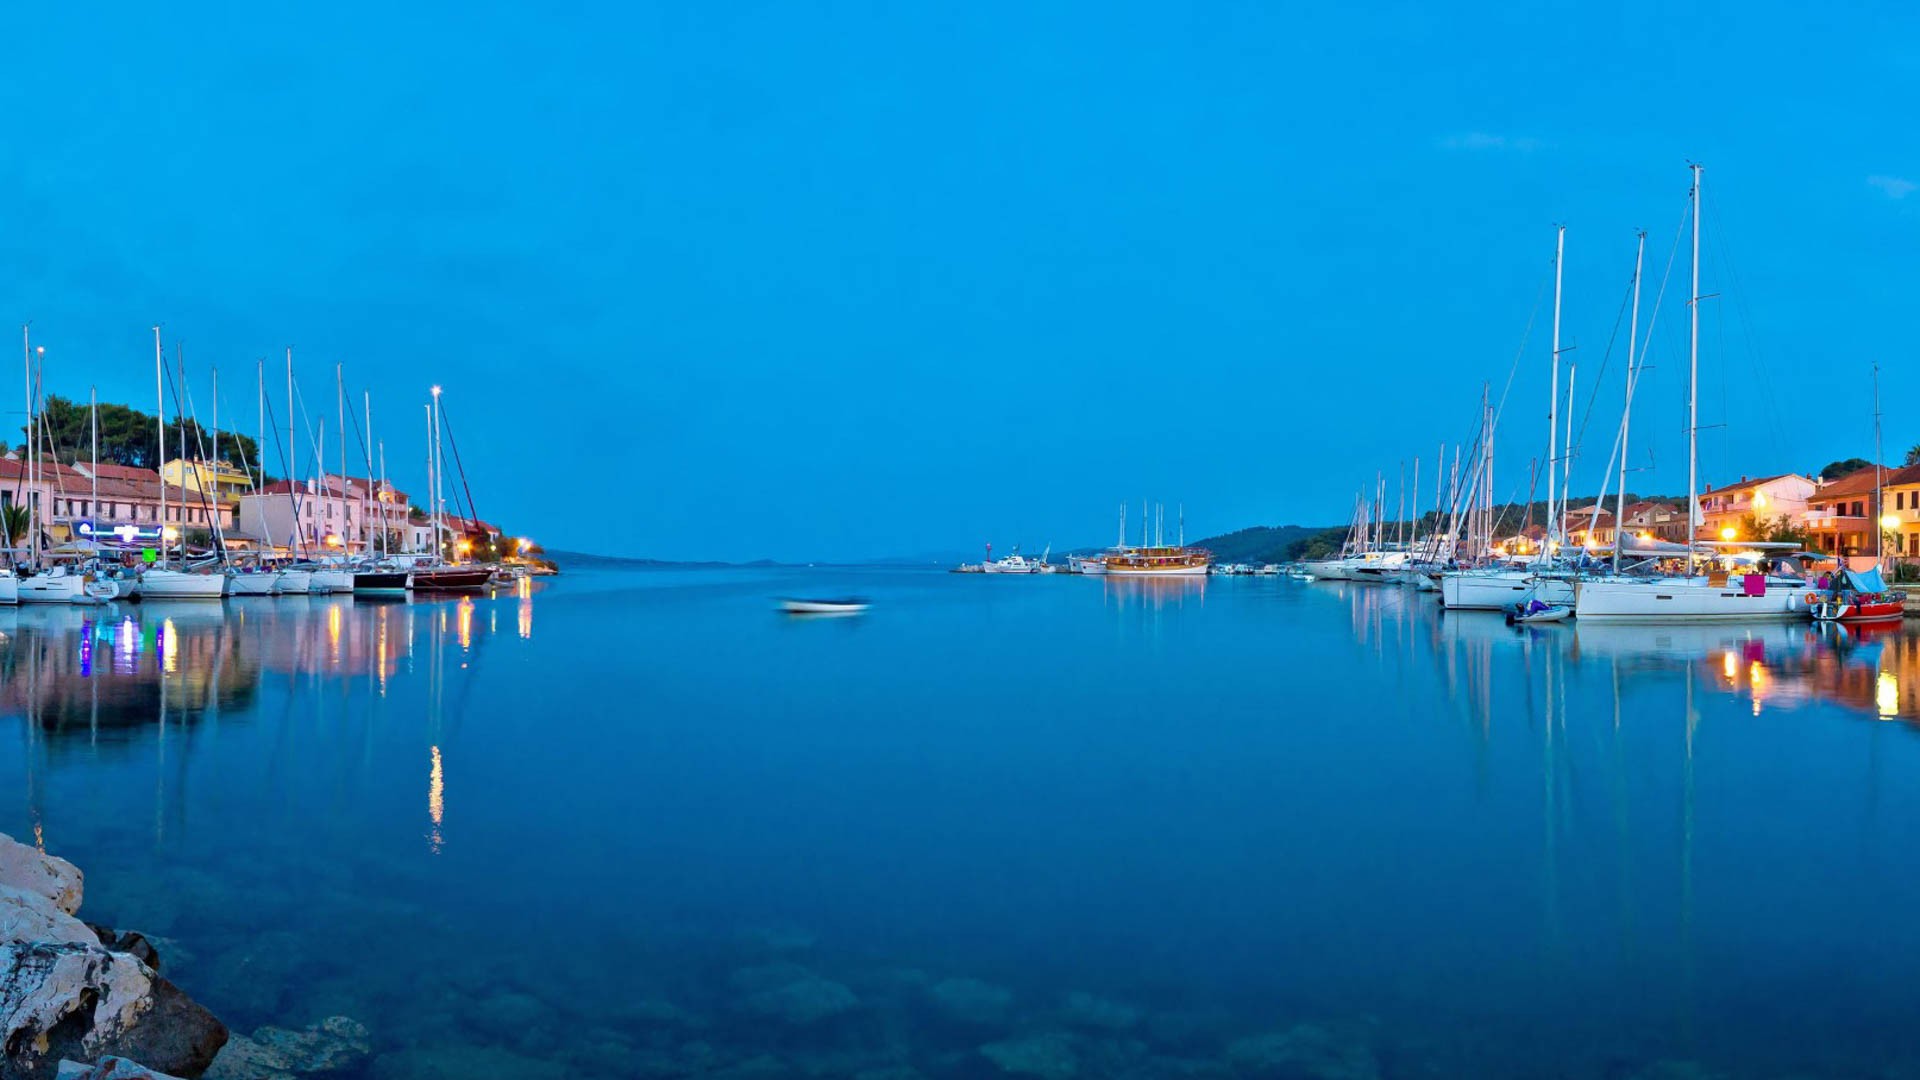 Sali - Adriatic Sea | Croatia Cruise Croatia Cruise